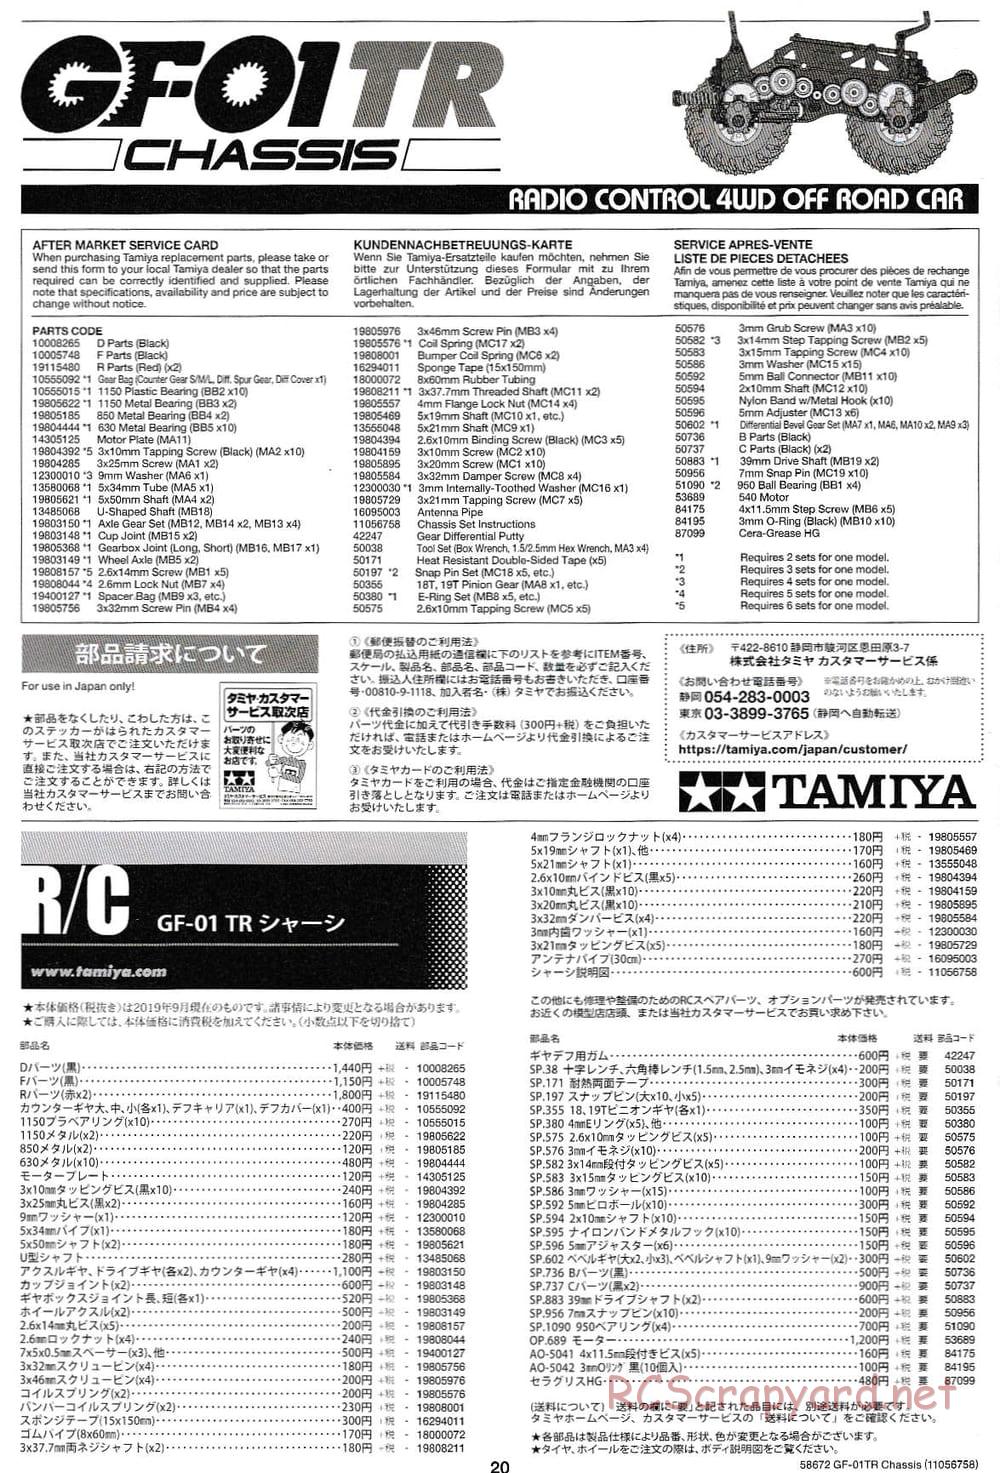 Tamiya - Monster Beetle Trail - GF-01TR Chassis - Manual - Page 20